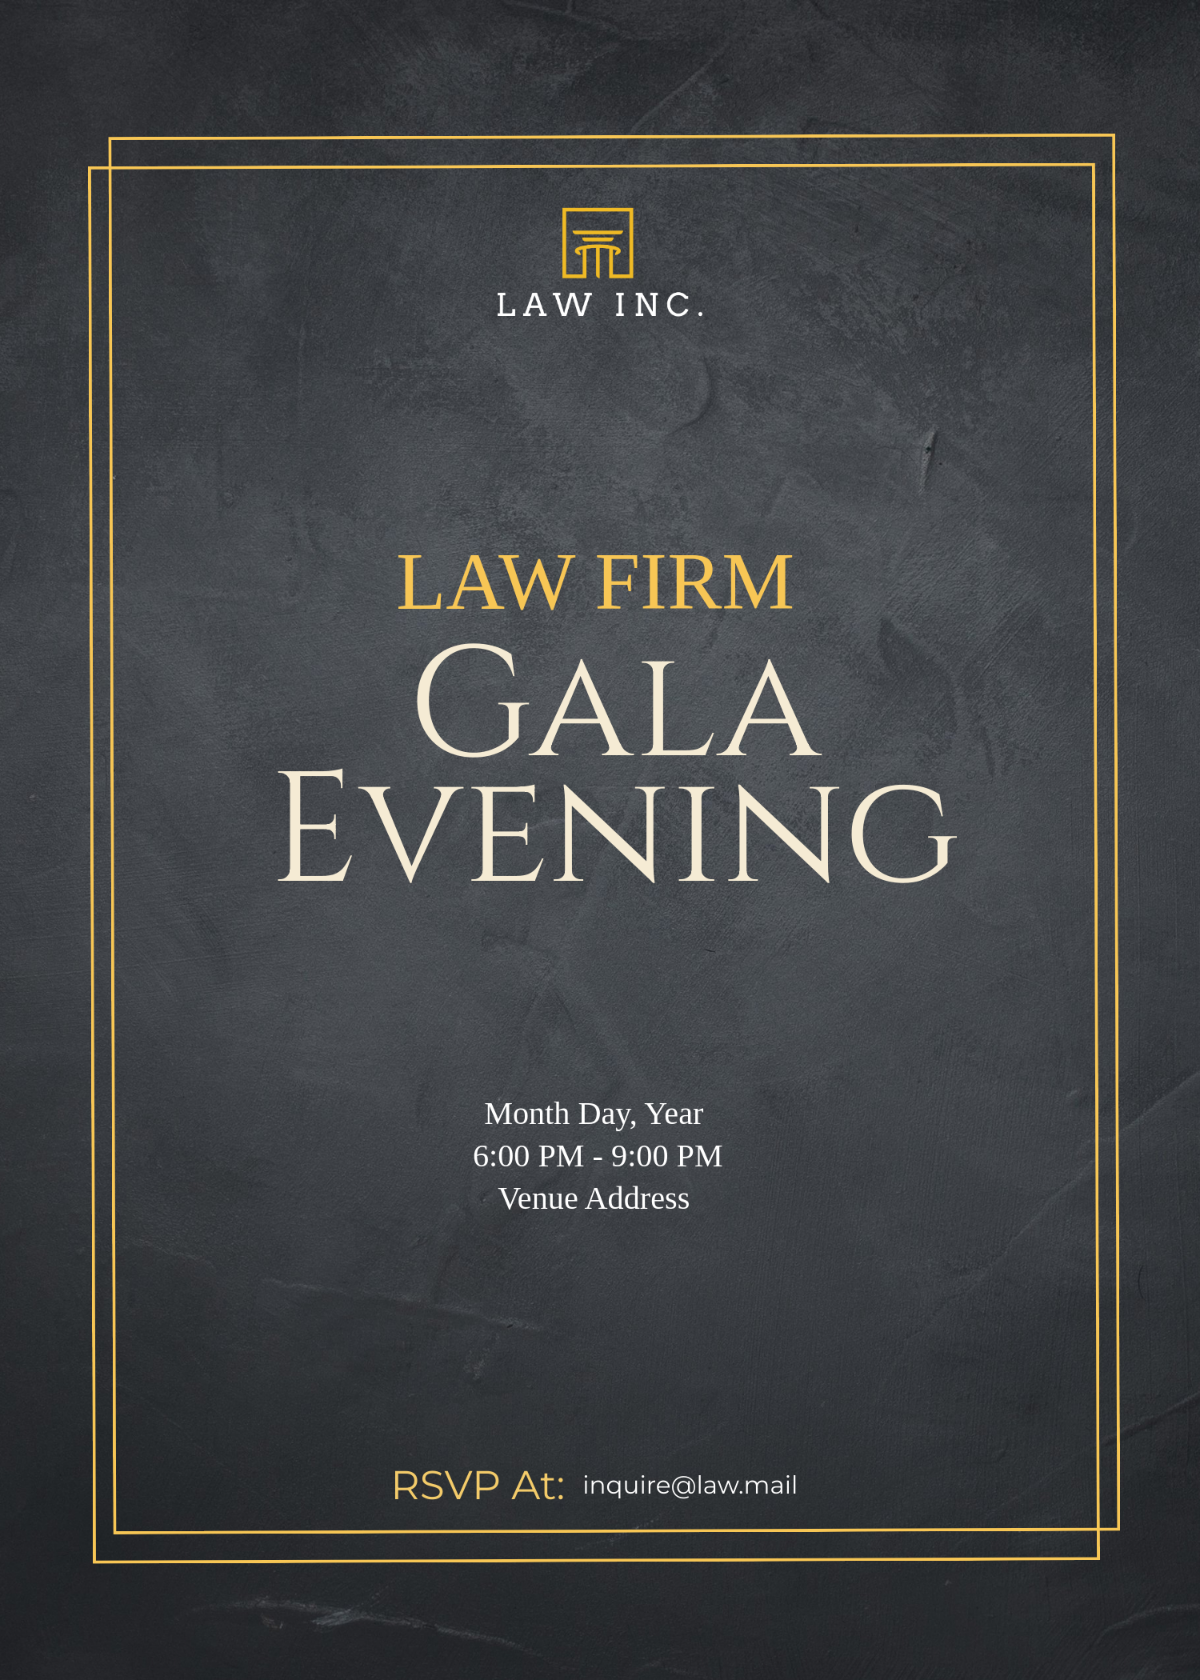 Law Firm Dinner Invitation